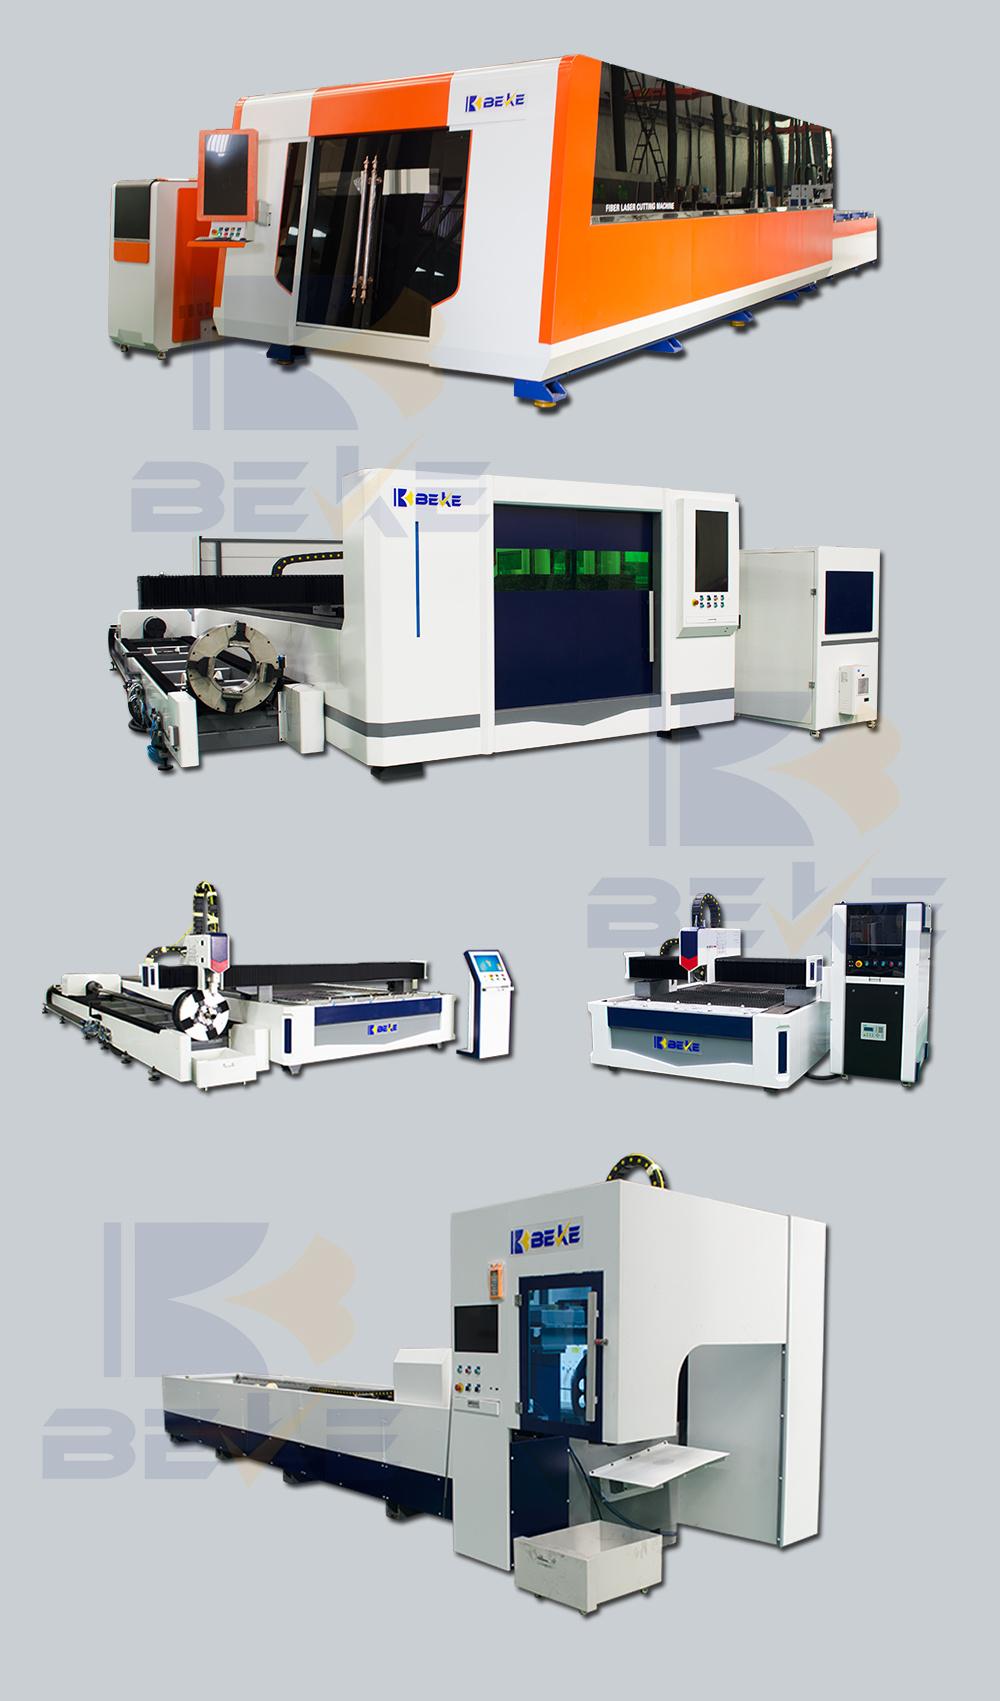 Beke Double Workbench Closed Type CNC Fiber Laser Cutting Machine Equipment